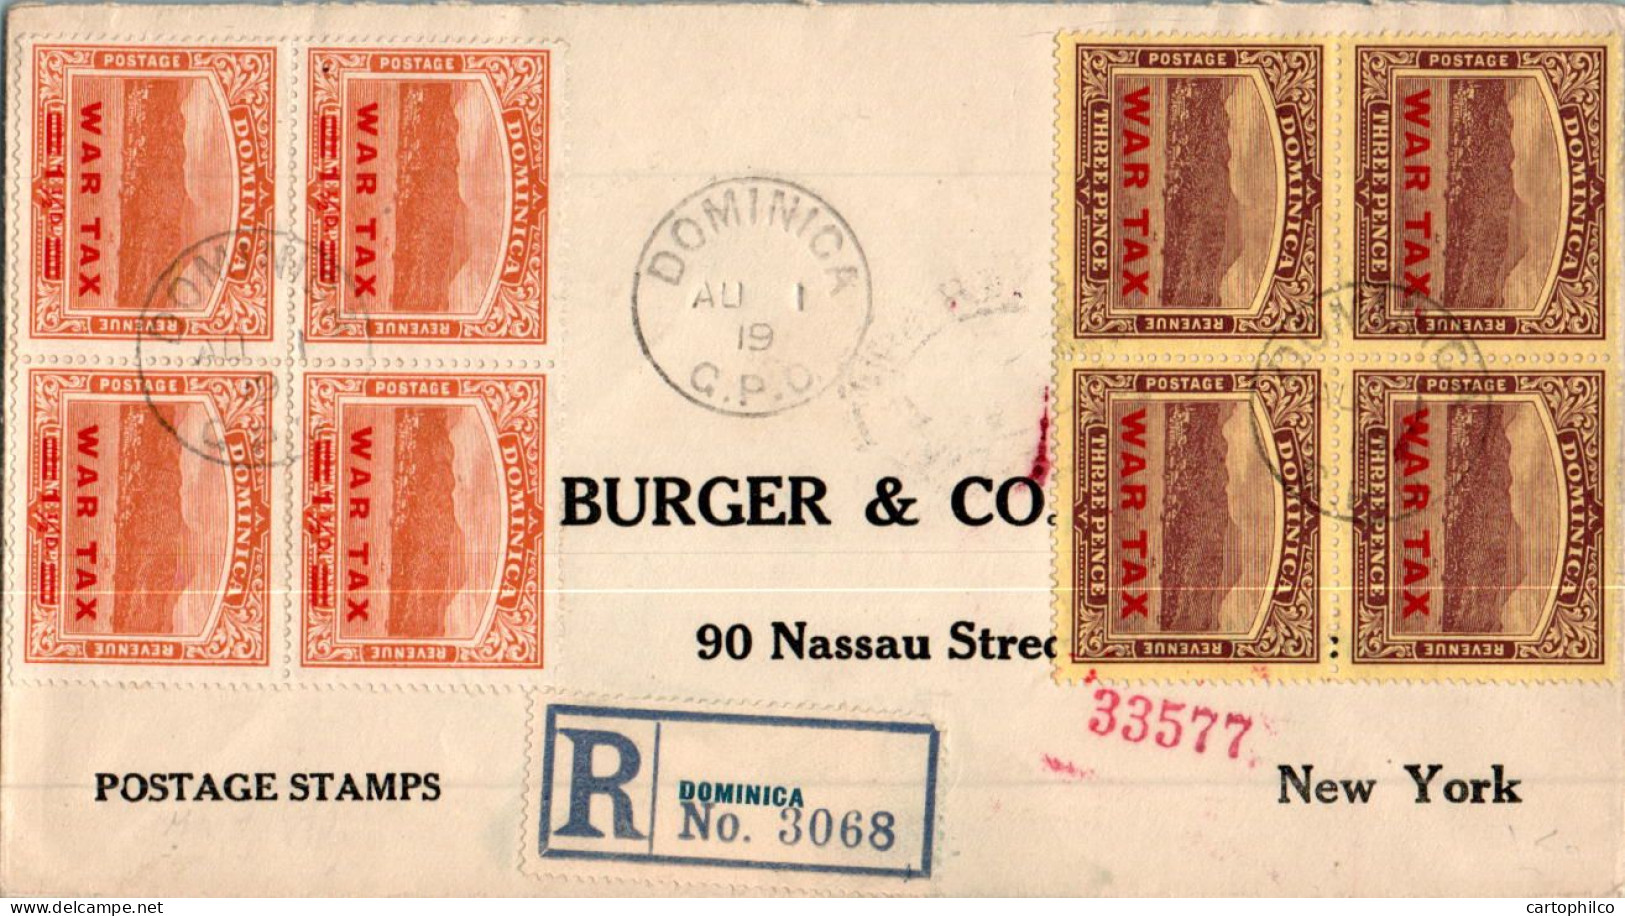 Dominica Cover 2 Blocks Of 4 WAR TAX Cancel For Burger Nassaut Street New York US 1919 - Dominica (...-1978)